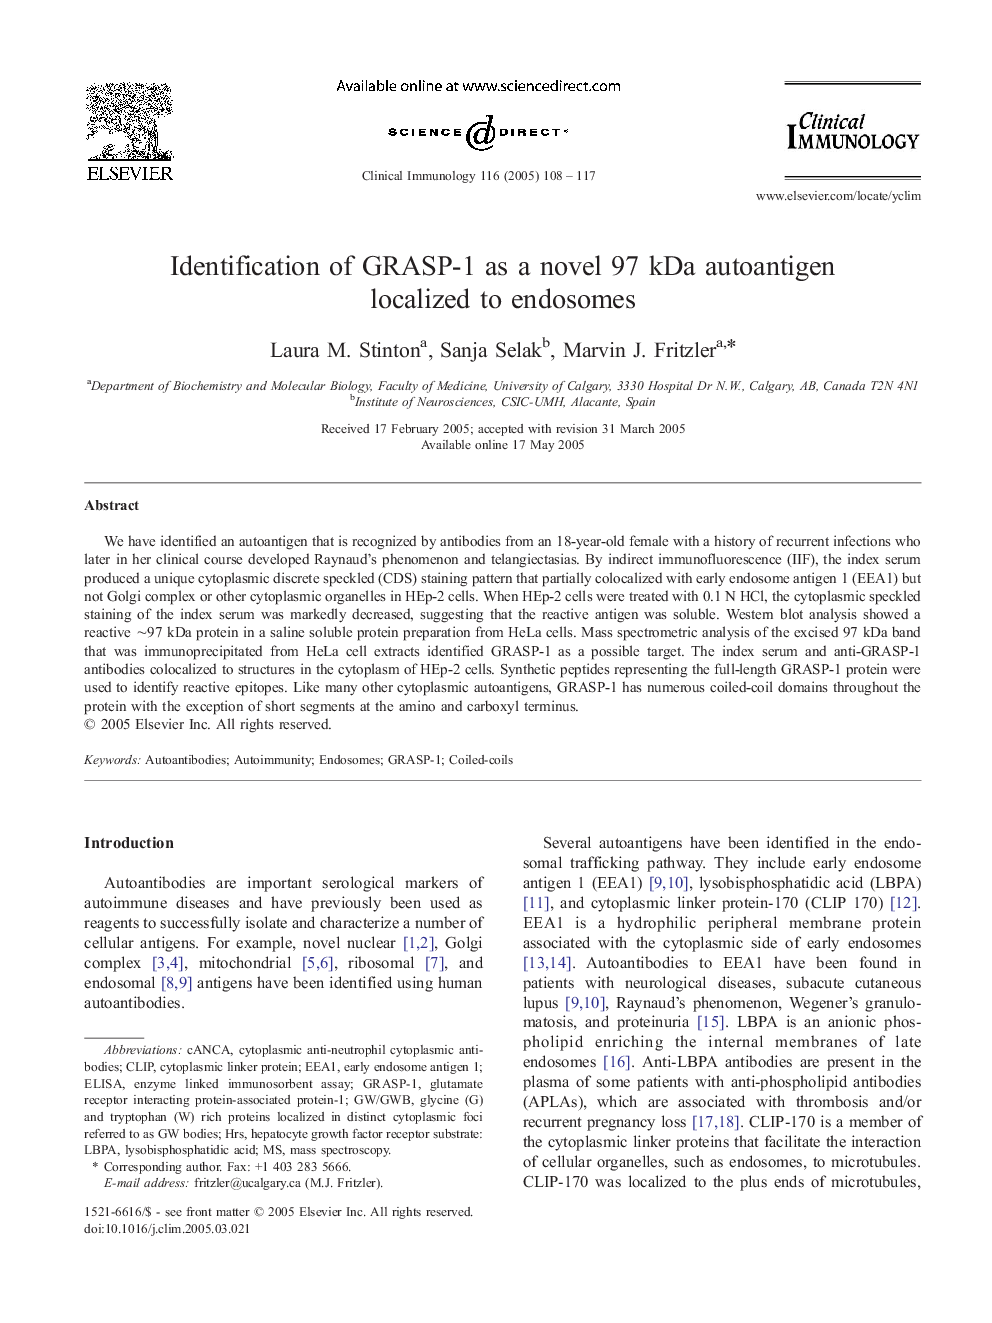 Identification of GRASP-1 as a novel 97 kDa autoantigen localized to endosomes